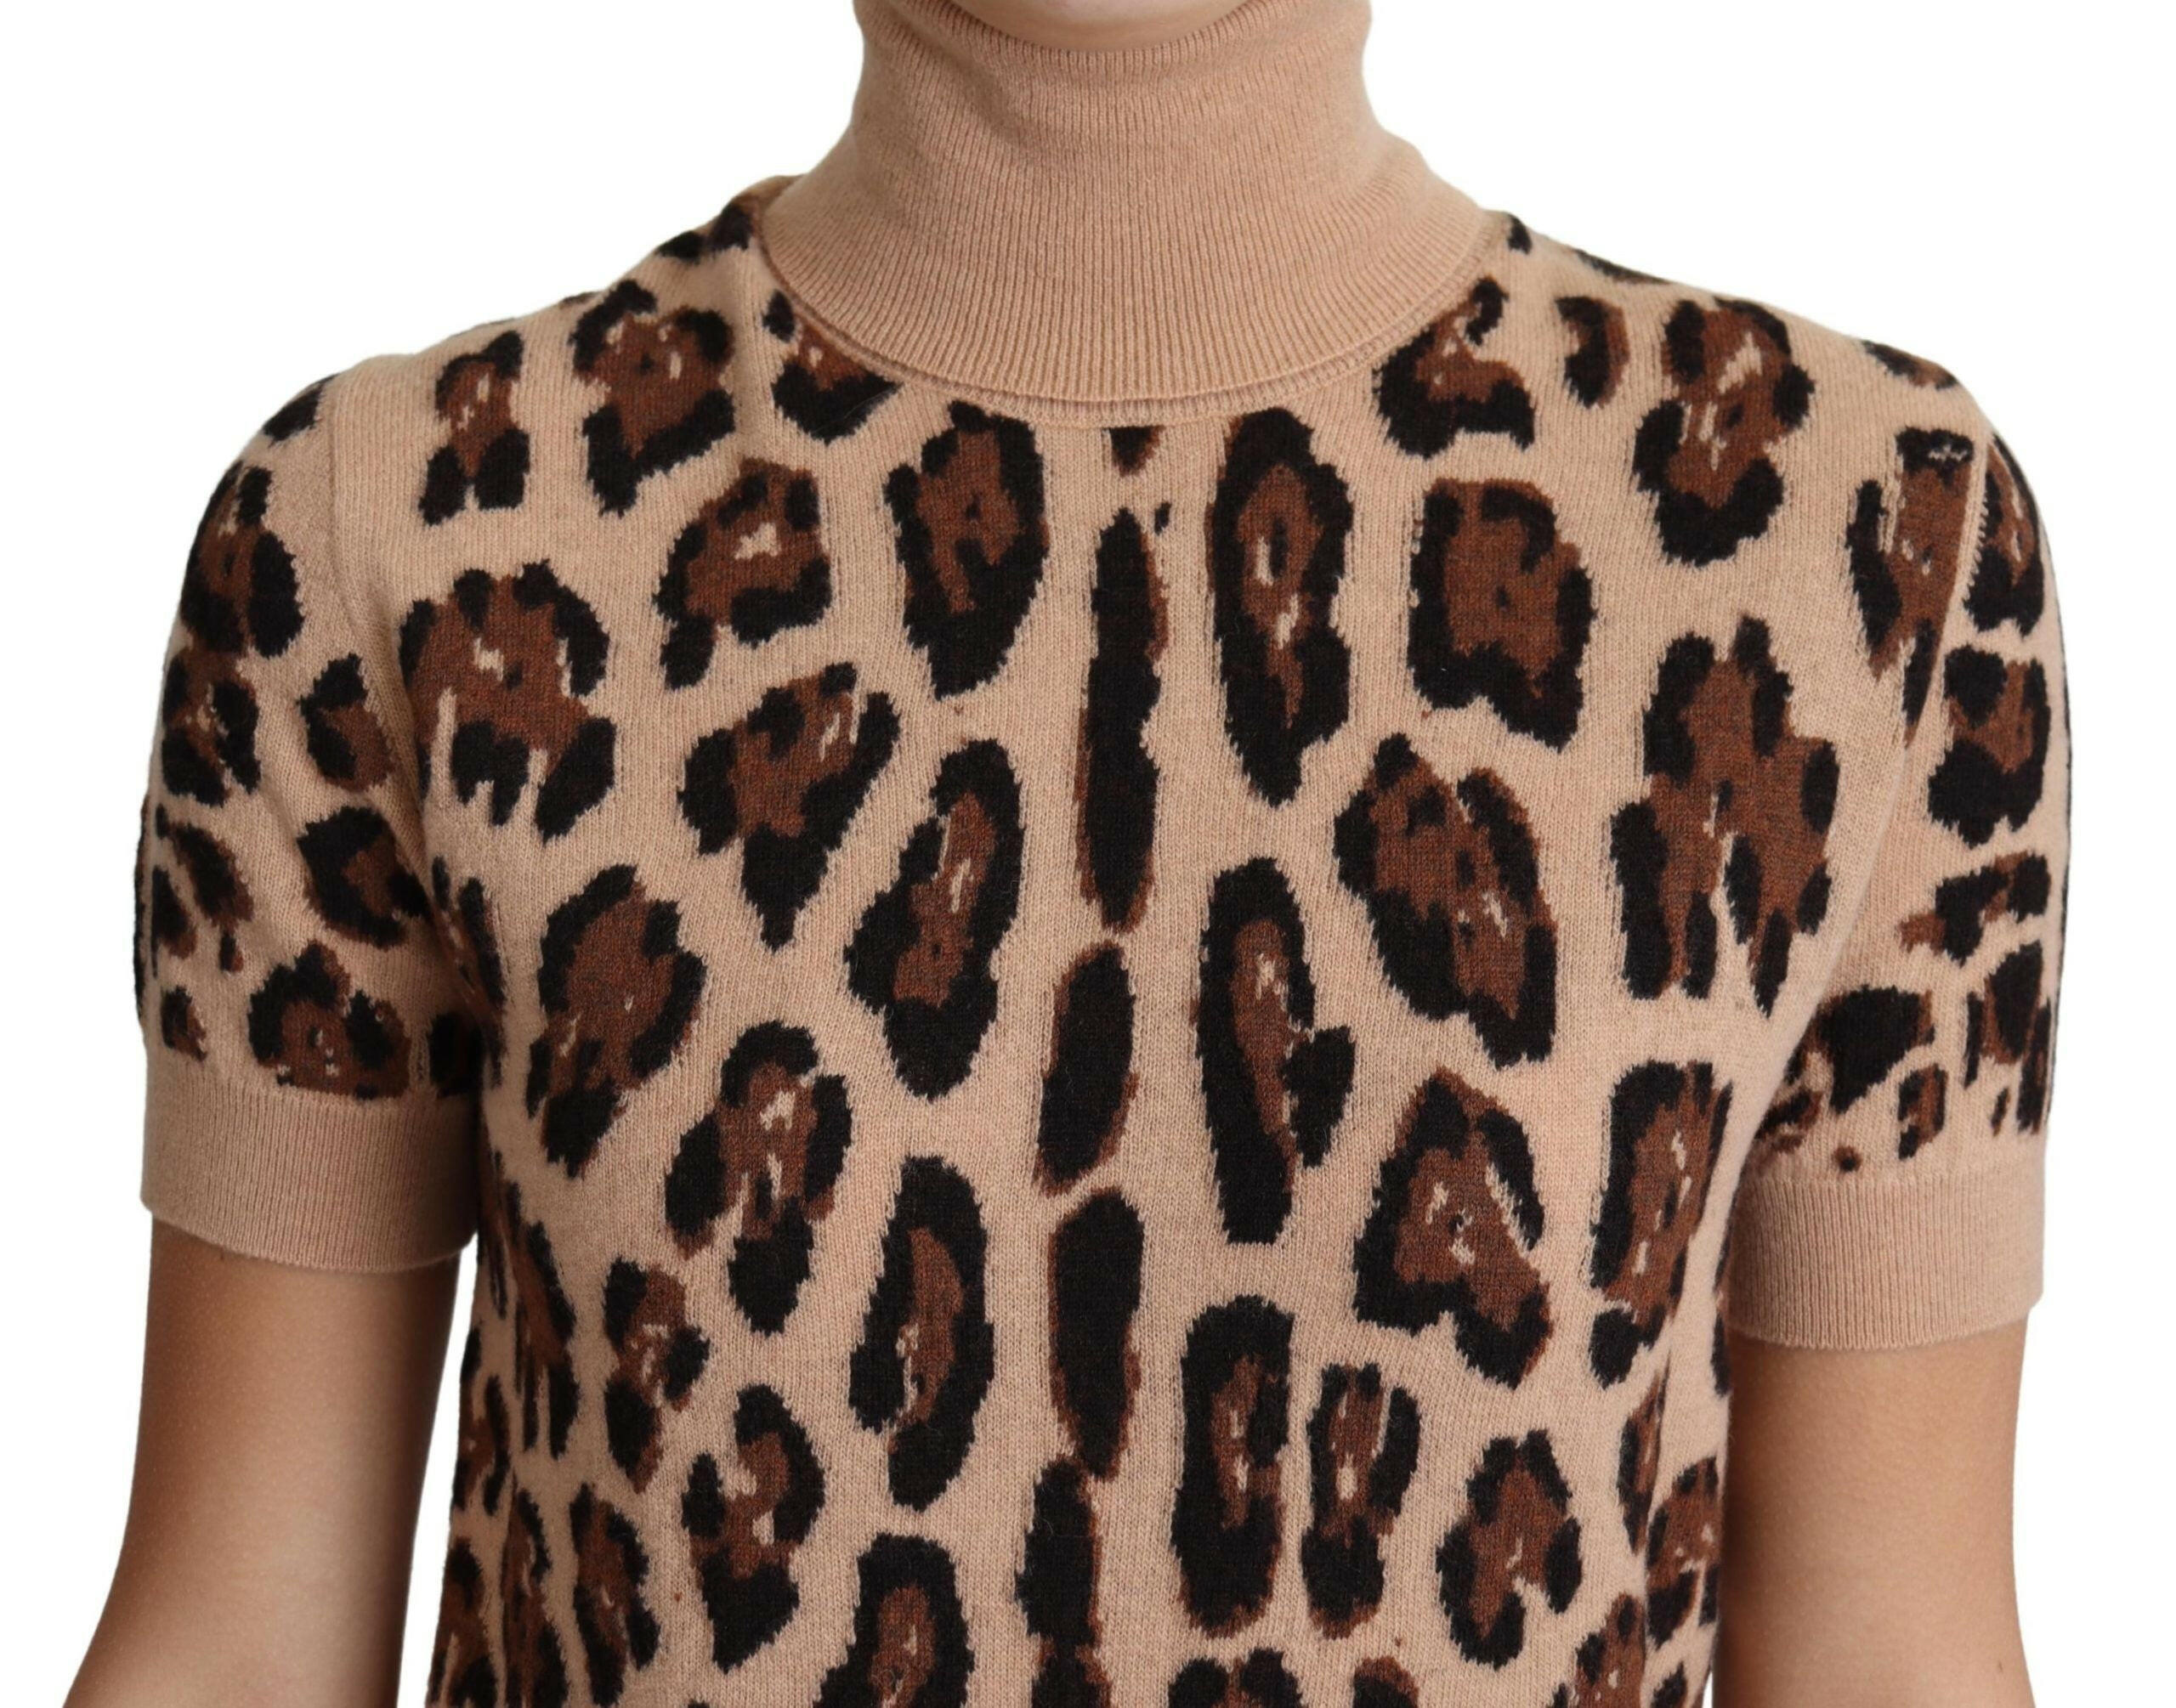 Dolce & Gabbana Beige Leopard Cashmere Print Turtleneck Top - GENUINE AUTHENTIC BRAND LLC  